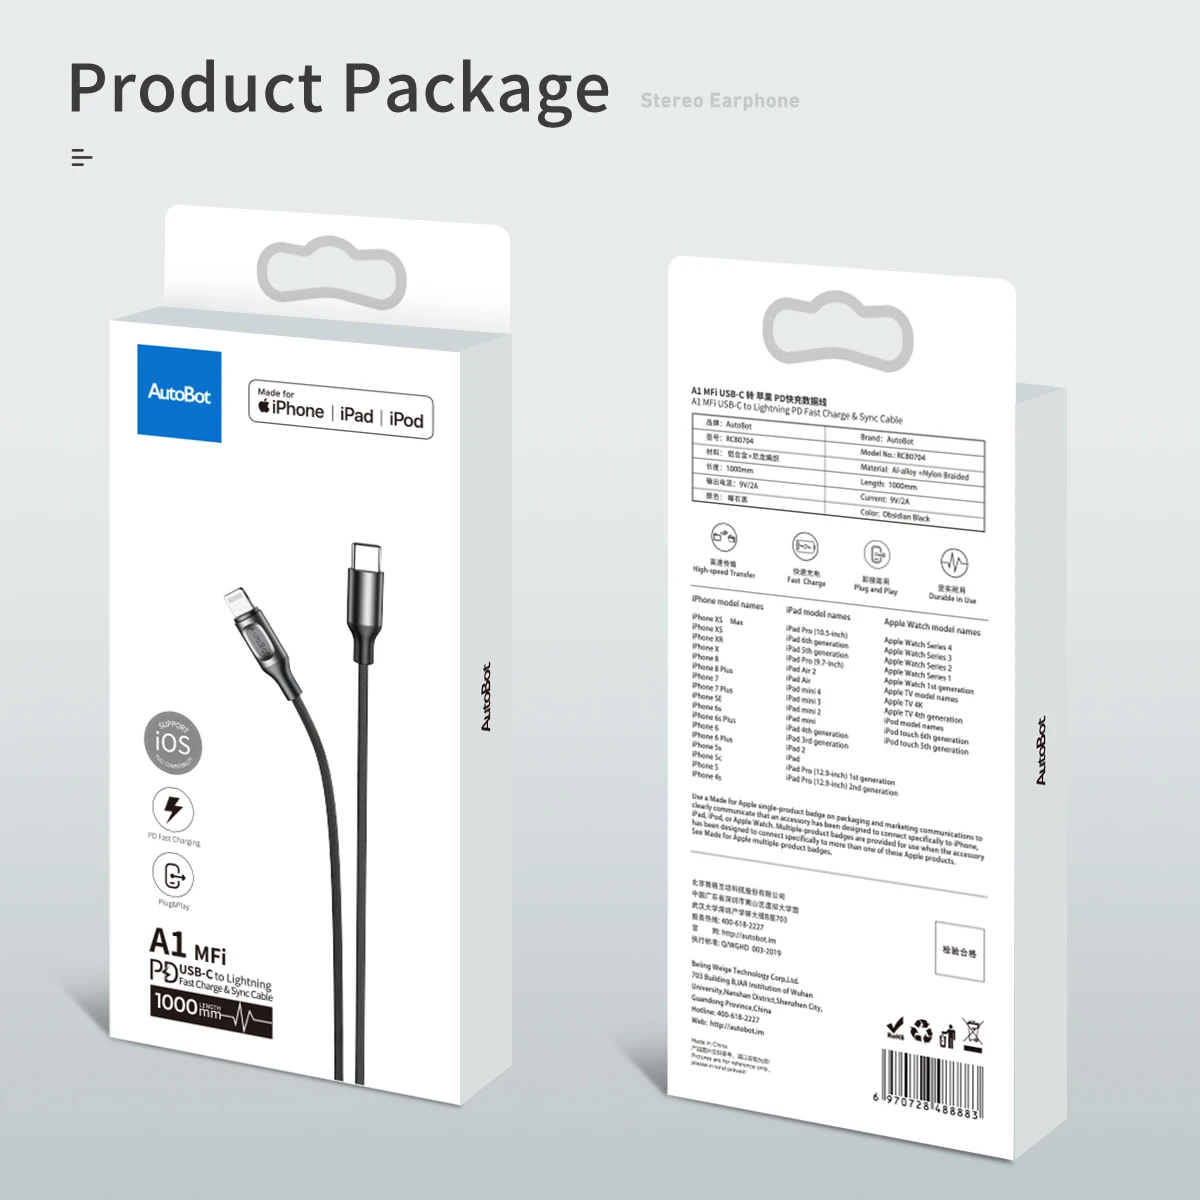 MFi USB C к Lightning Кабель для iPhone X XS Max XR 3A 36W PD Быстрая зарядка и синхронизация кабель для MacBook IPad IPod, USB шнур